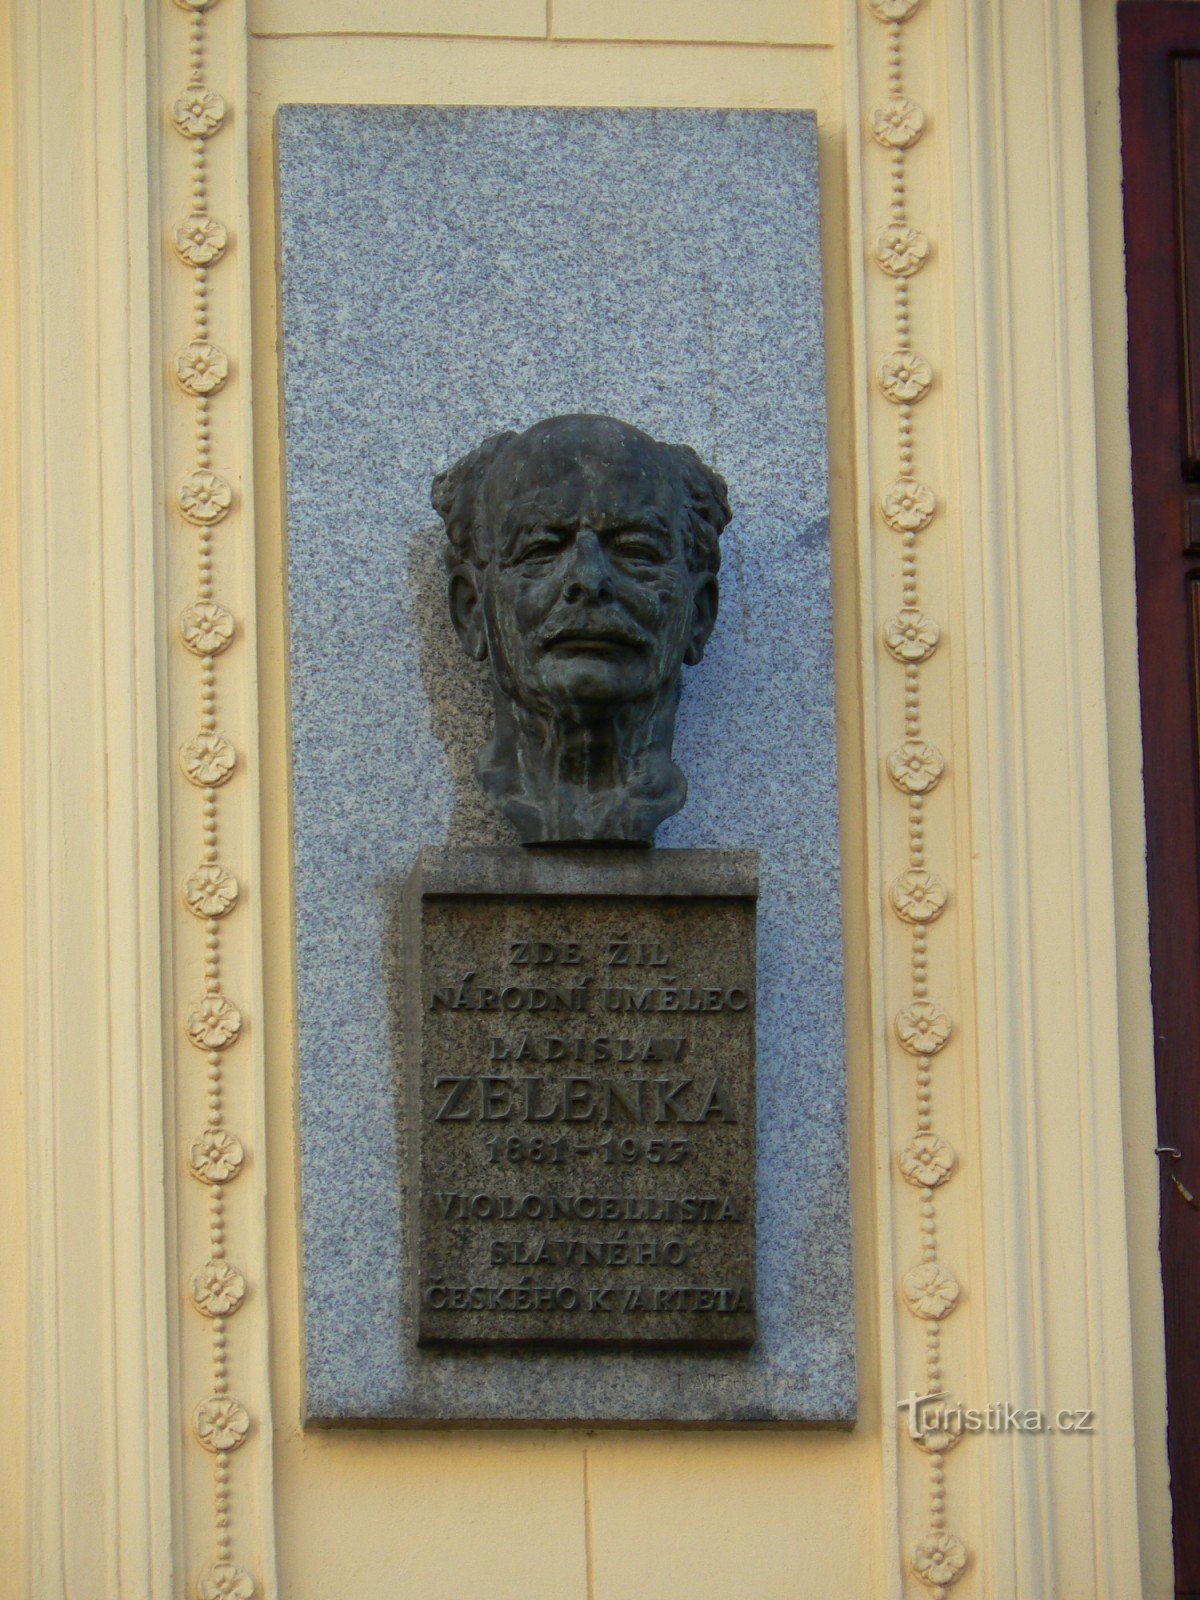 Tấm bia tưởng niệm Ladislav Zelenka